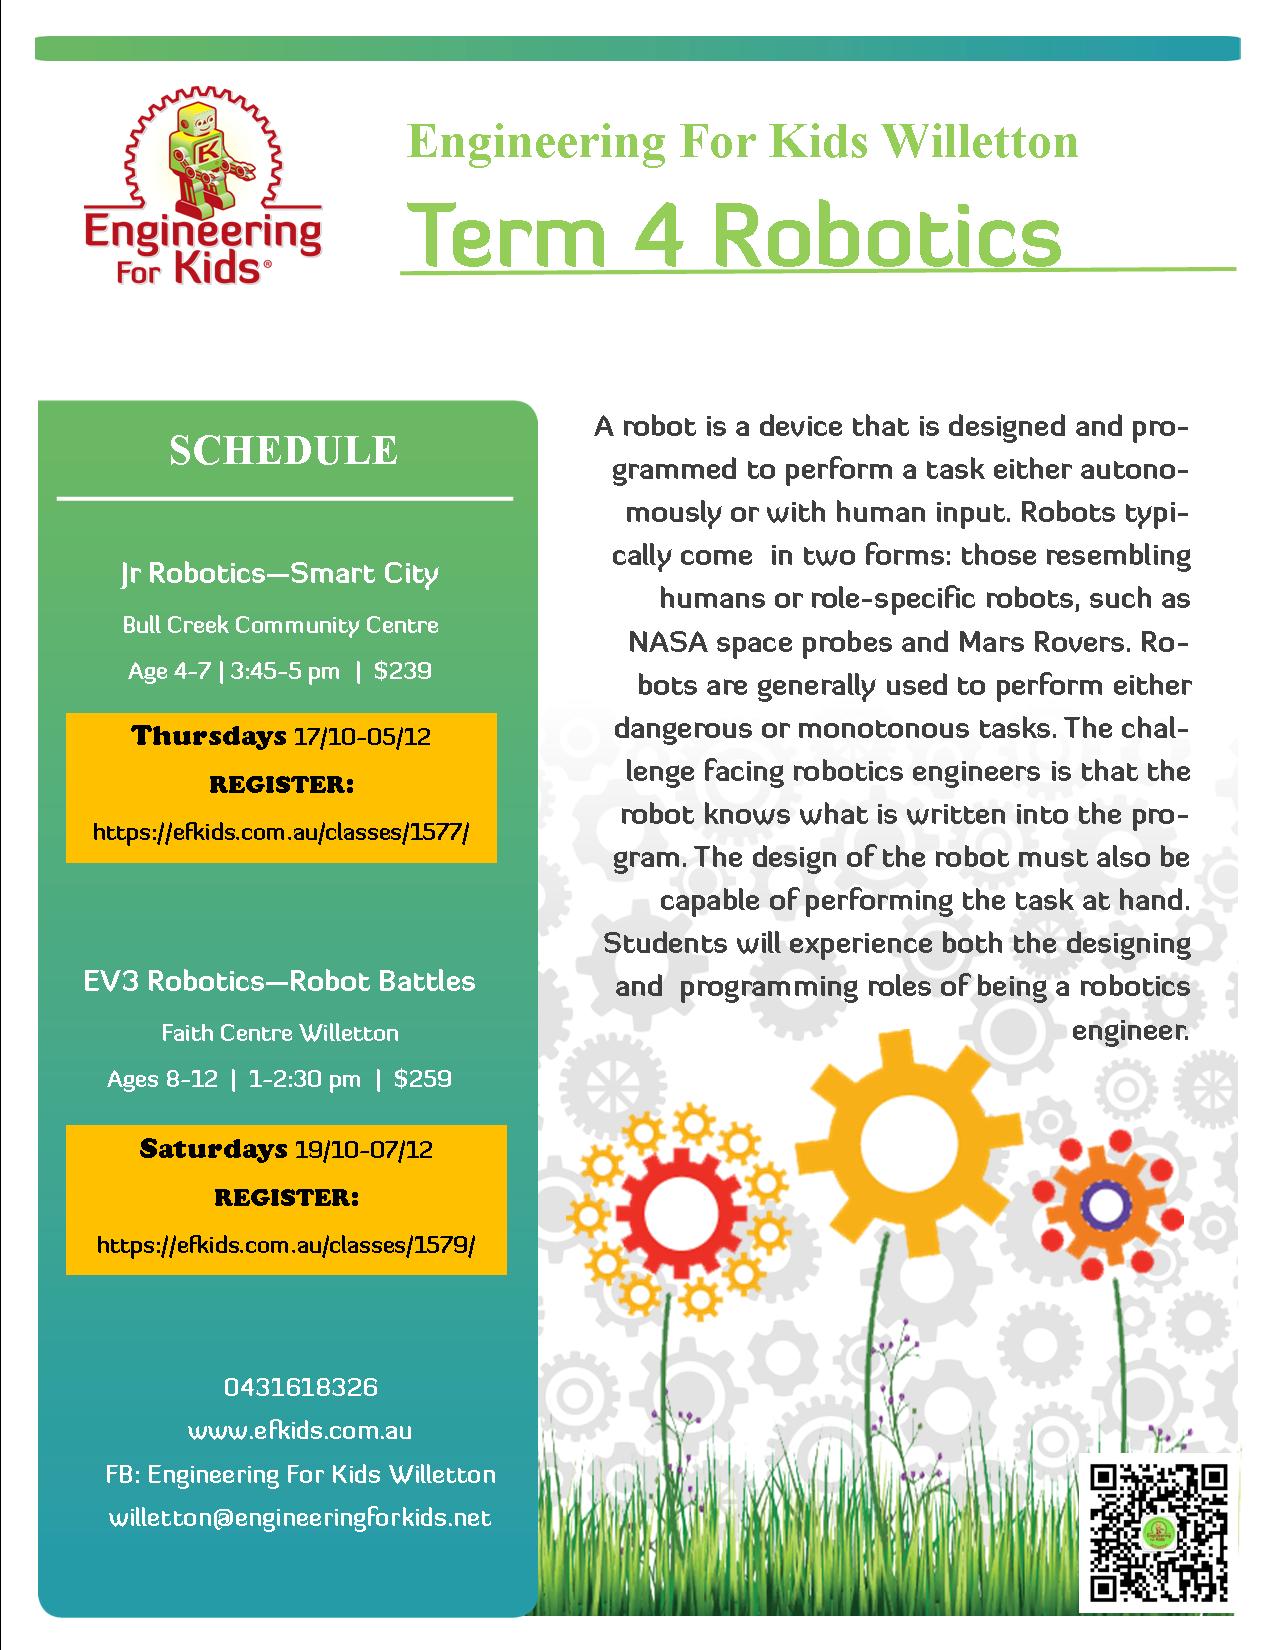 Term 4 EV3 Robotics: Robot Battles